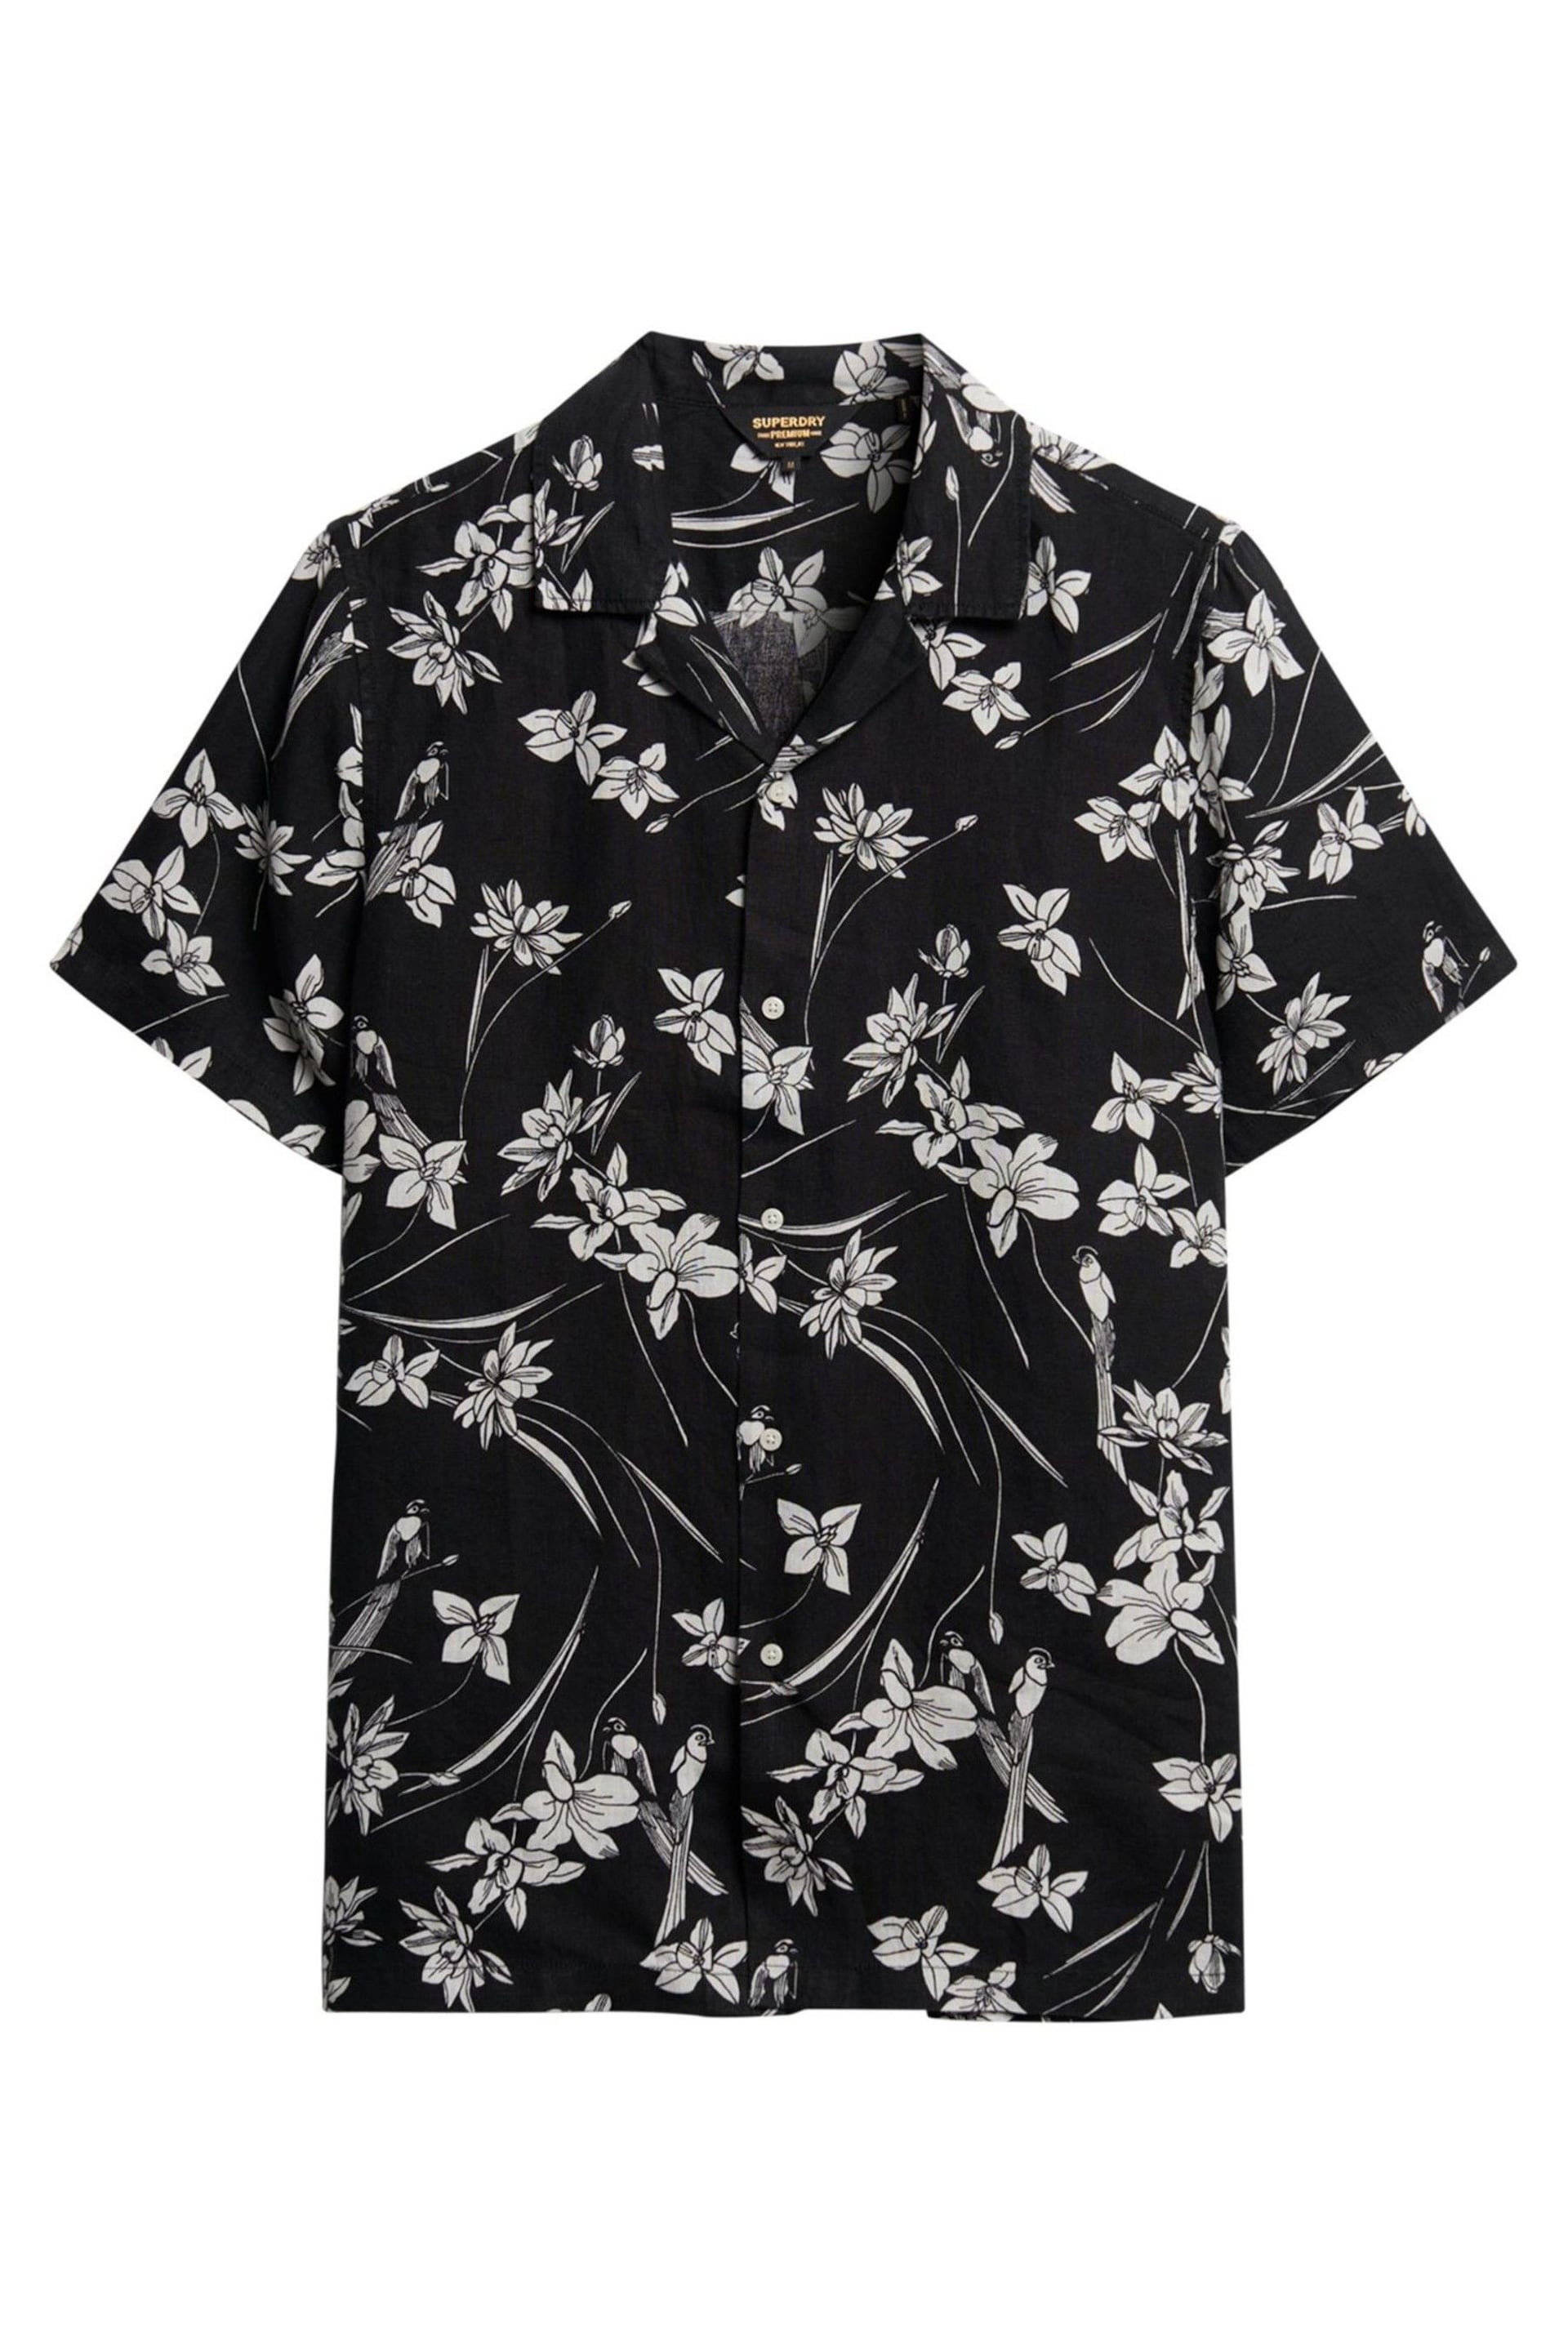 Superdry Black Open Collar Print Linen Shirt - Image 3 of 6